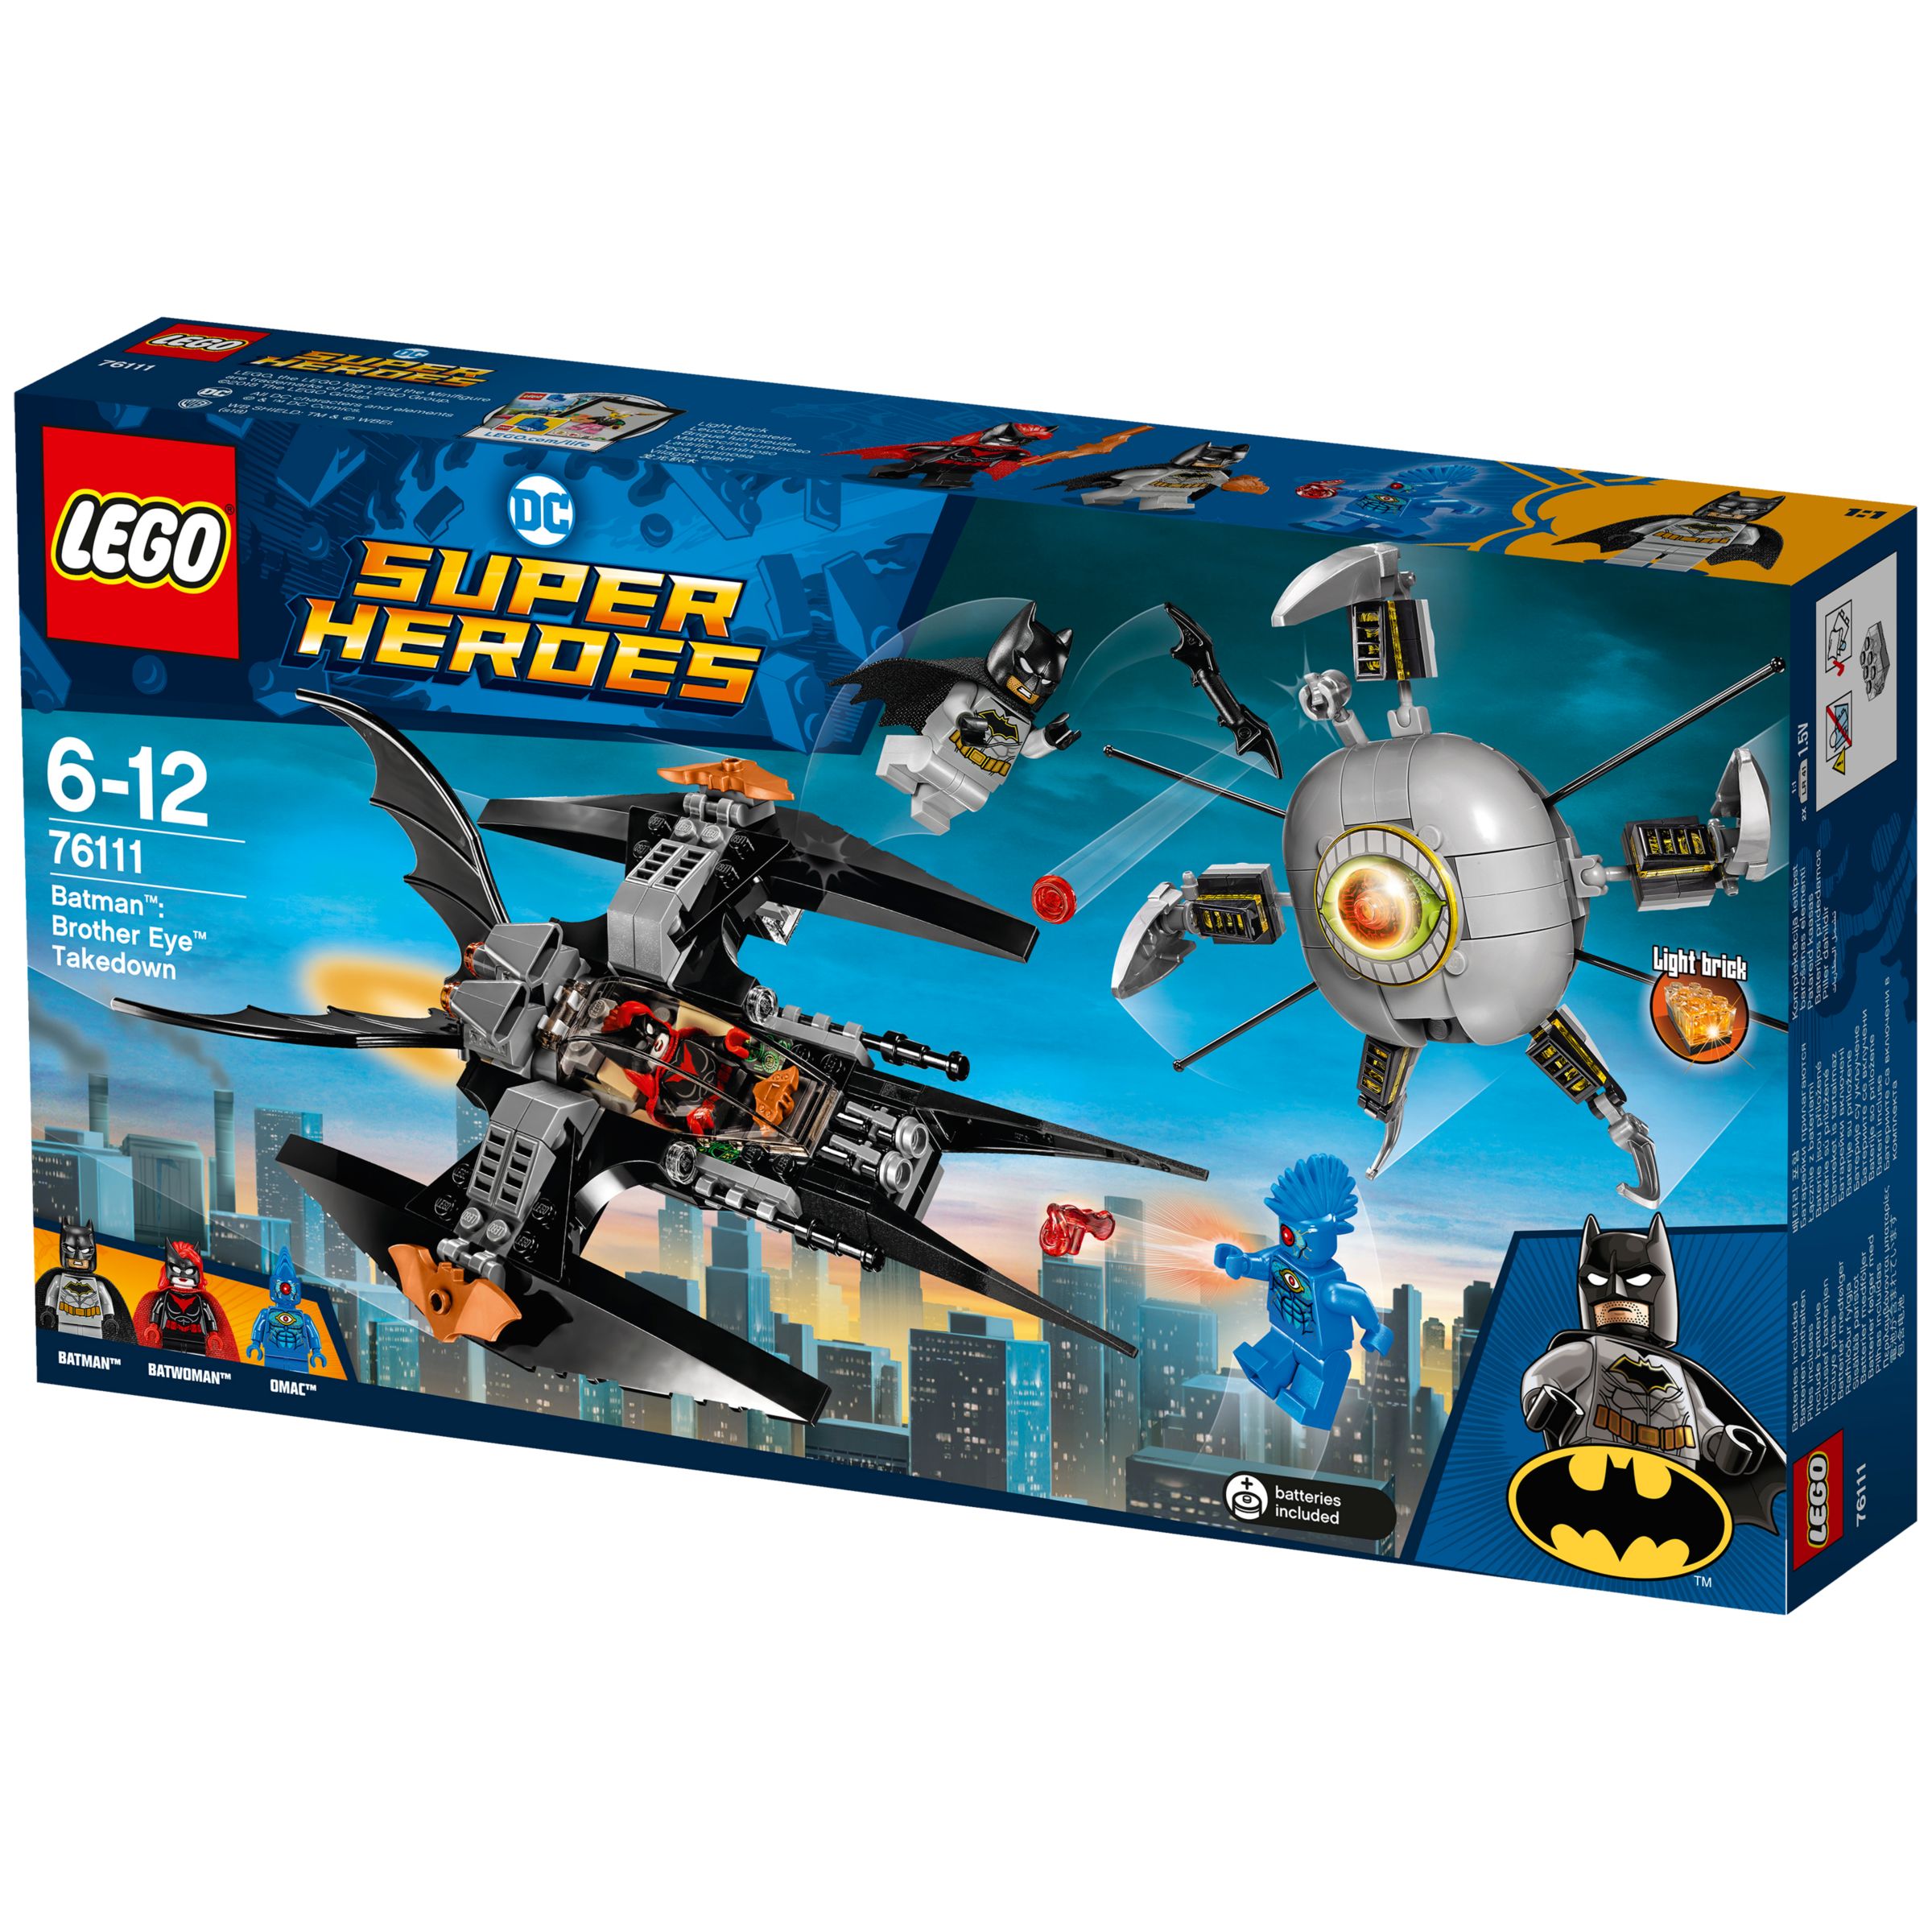 76111 Brother Eye Takedown for sale online Lego DC Comics Super Heroes Batman